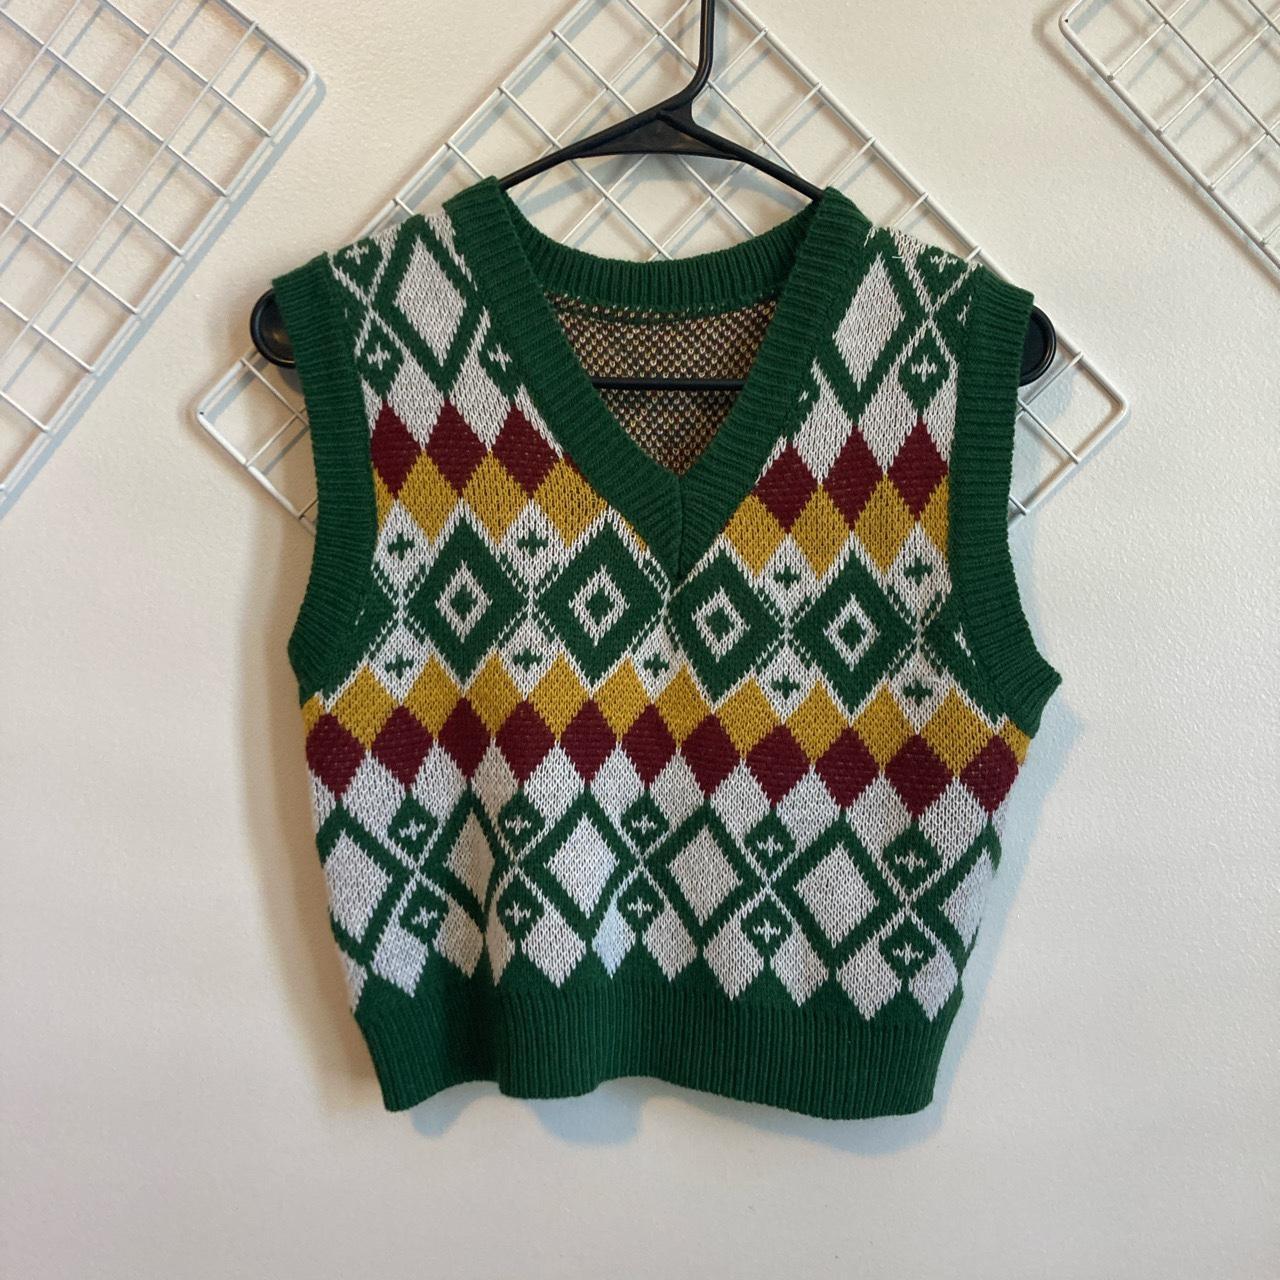 unique diamond knit sweater vest top in green, red,...